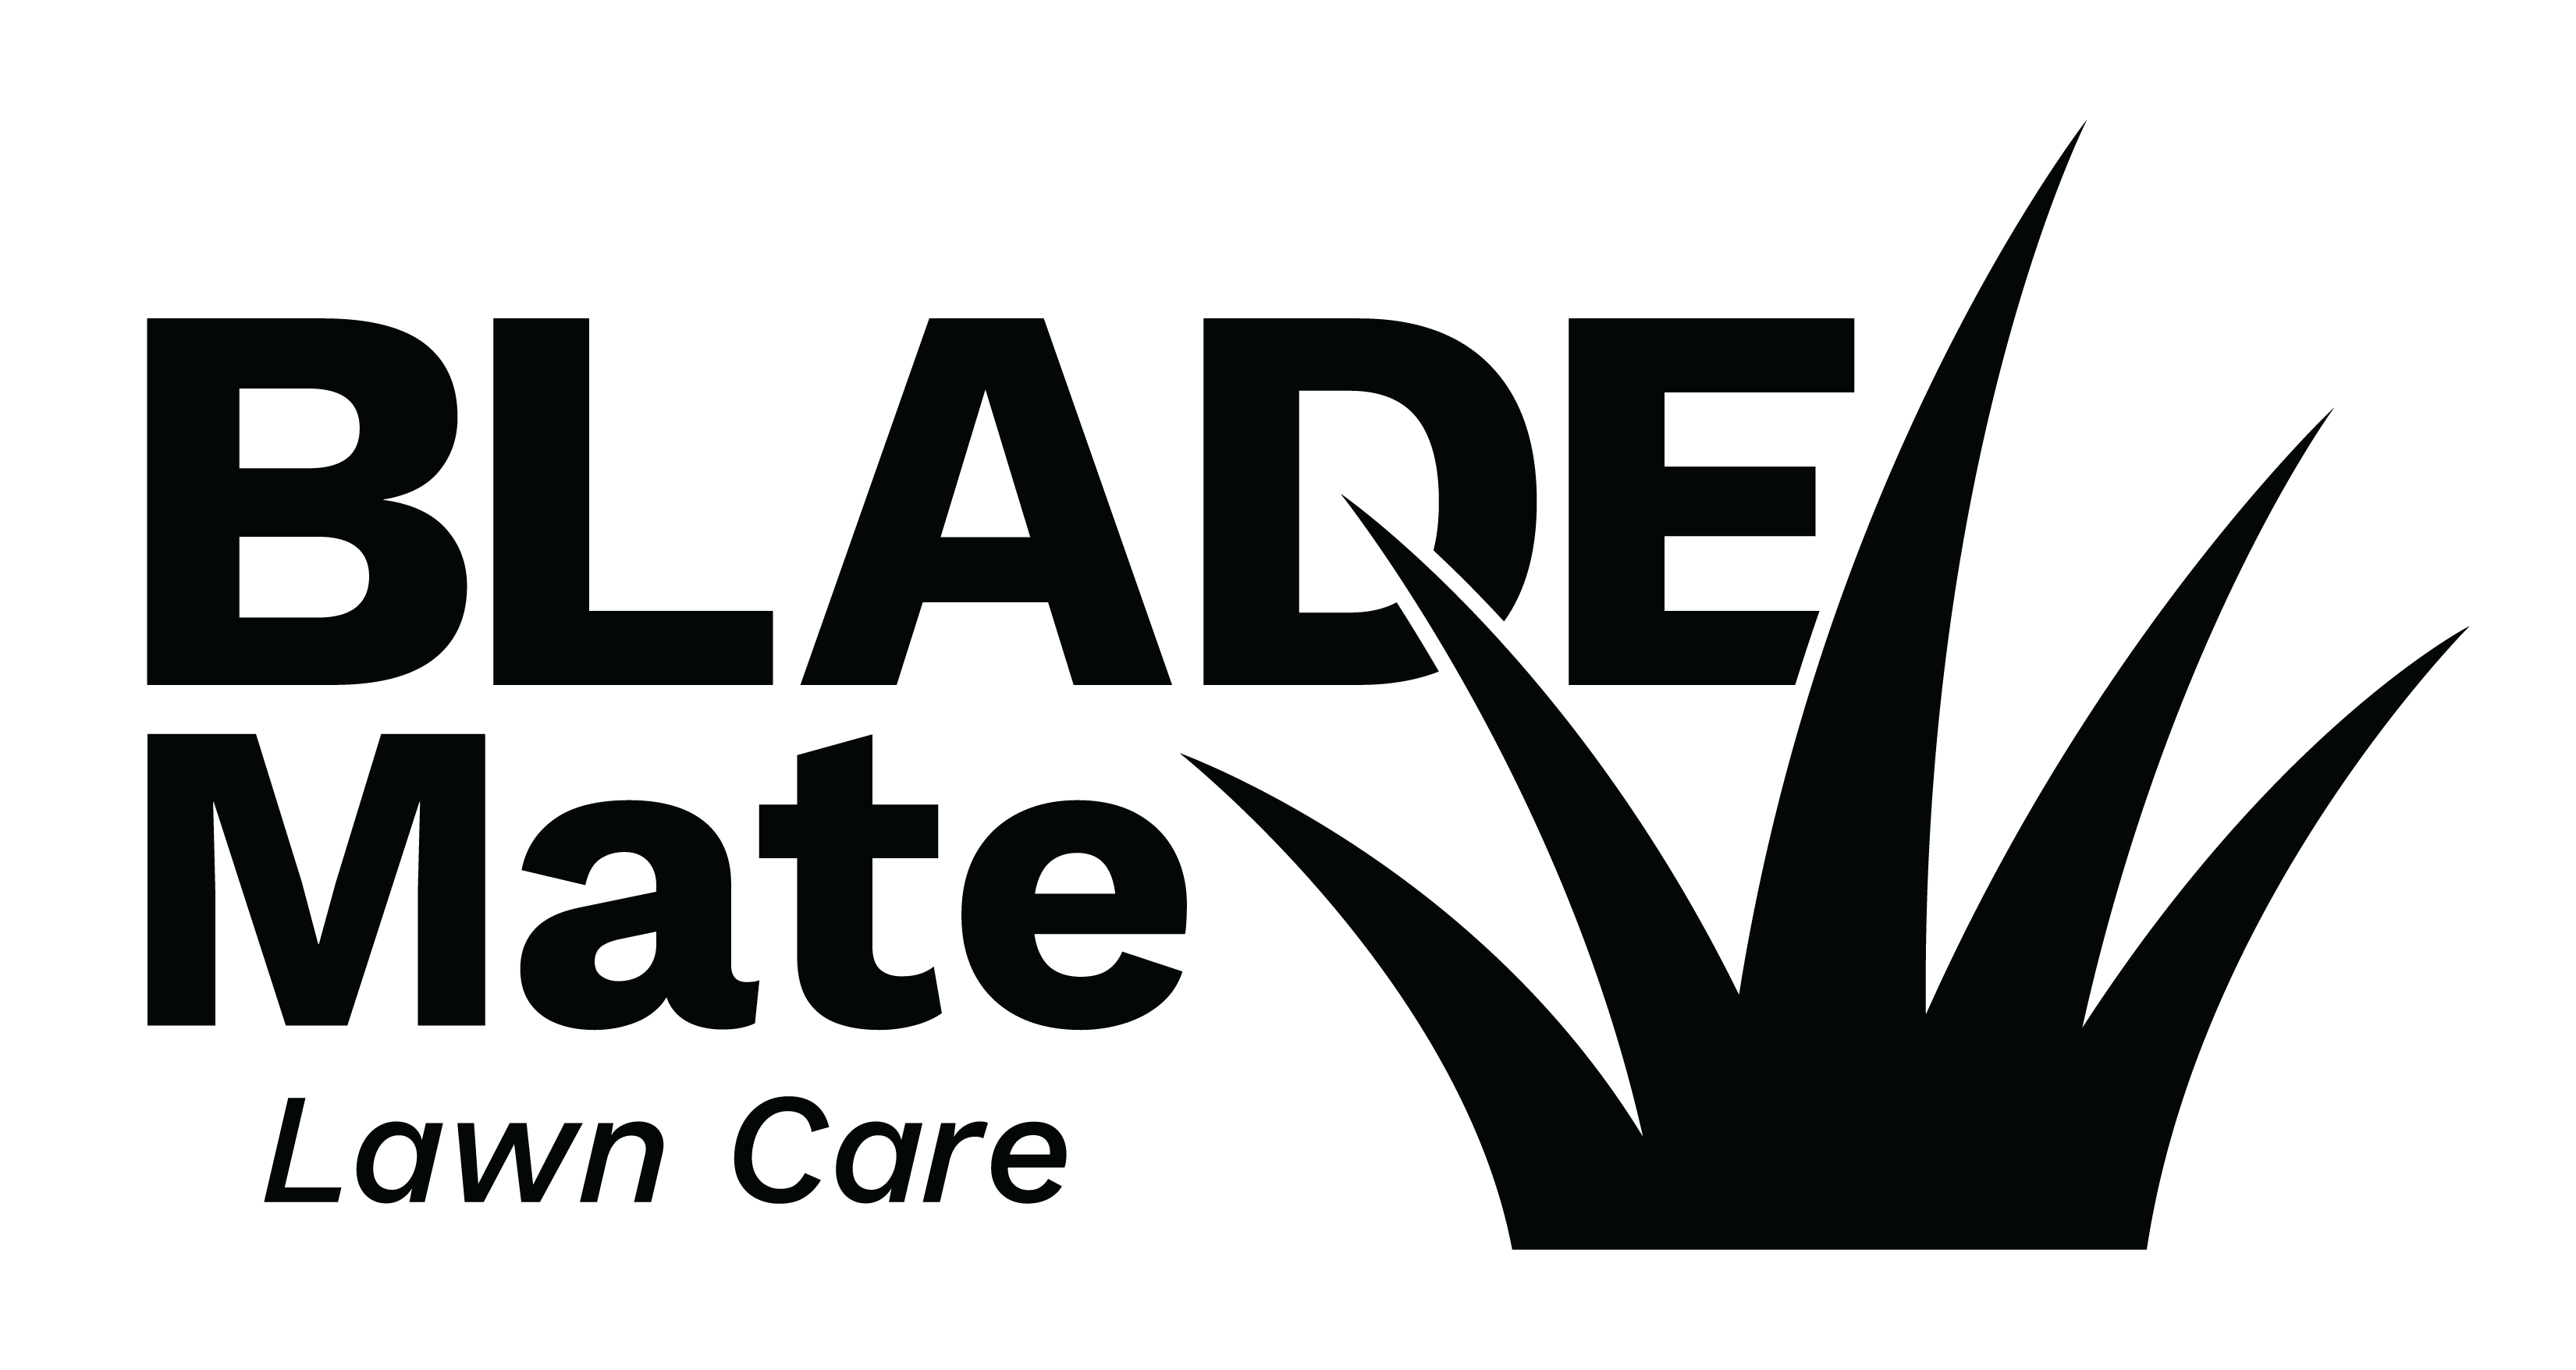 Blade Mate Lawn Care